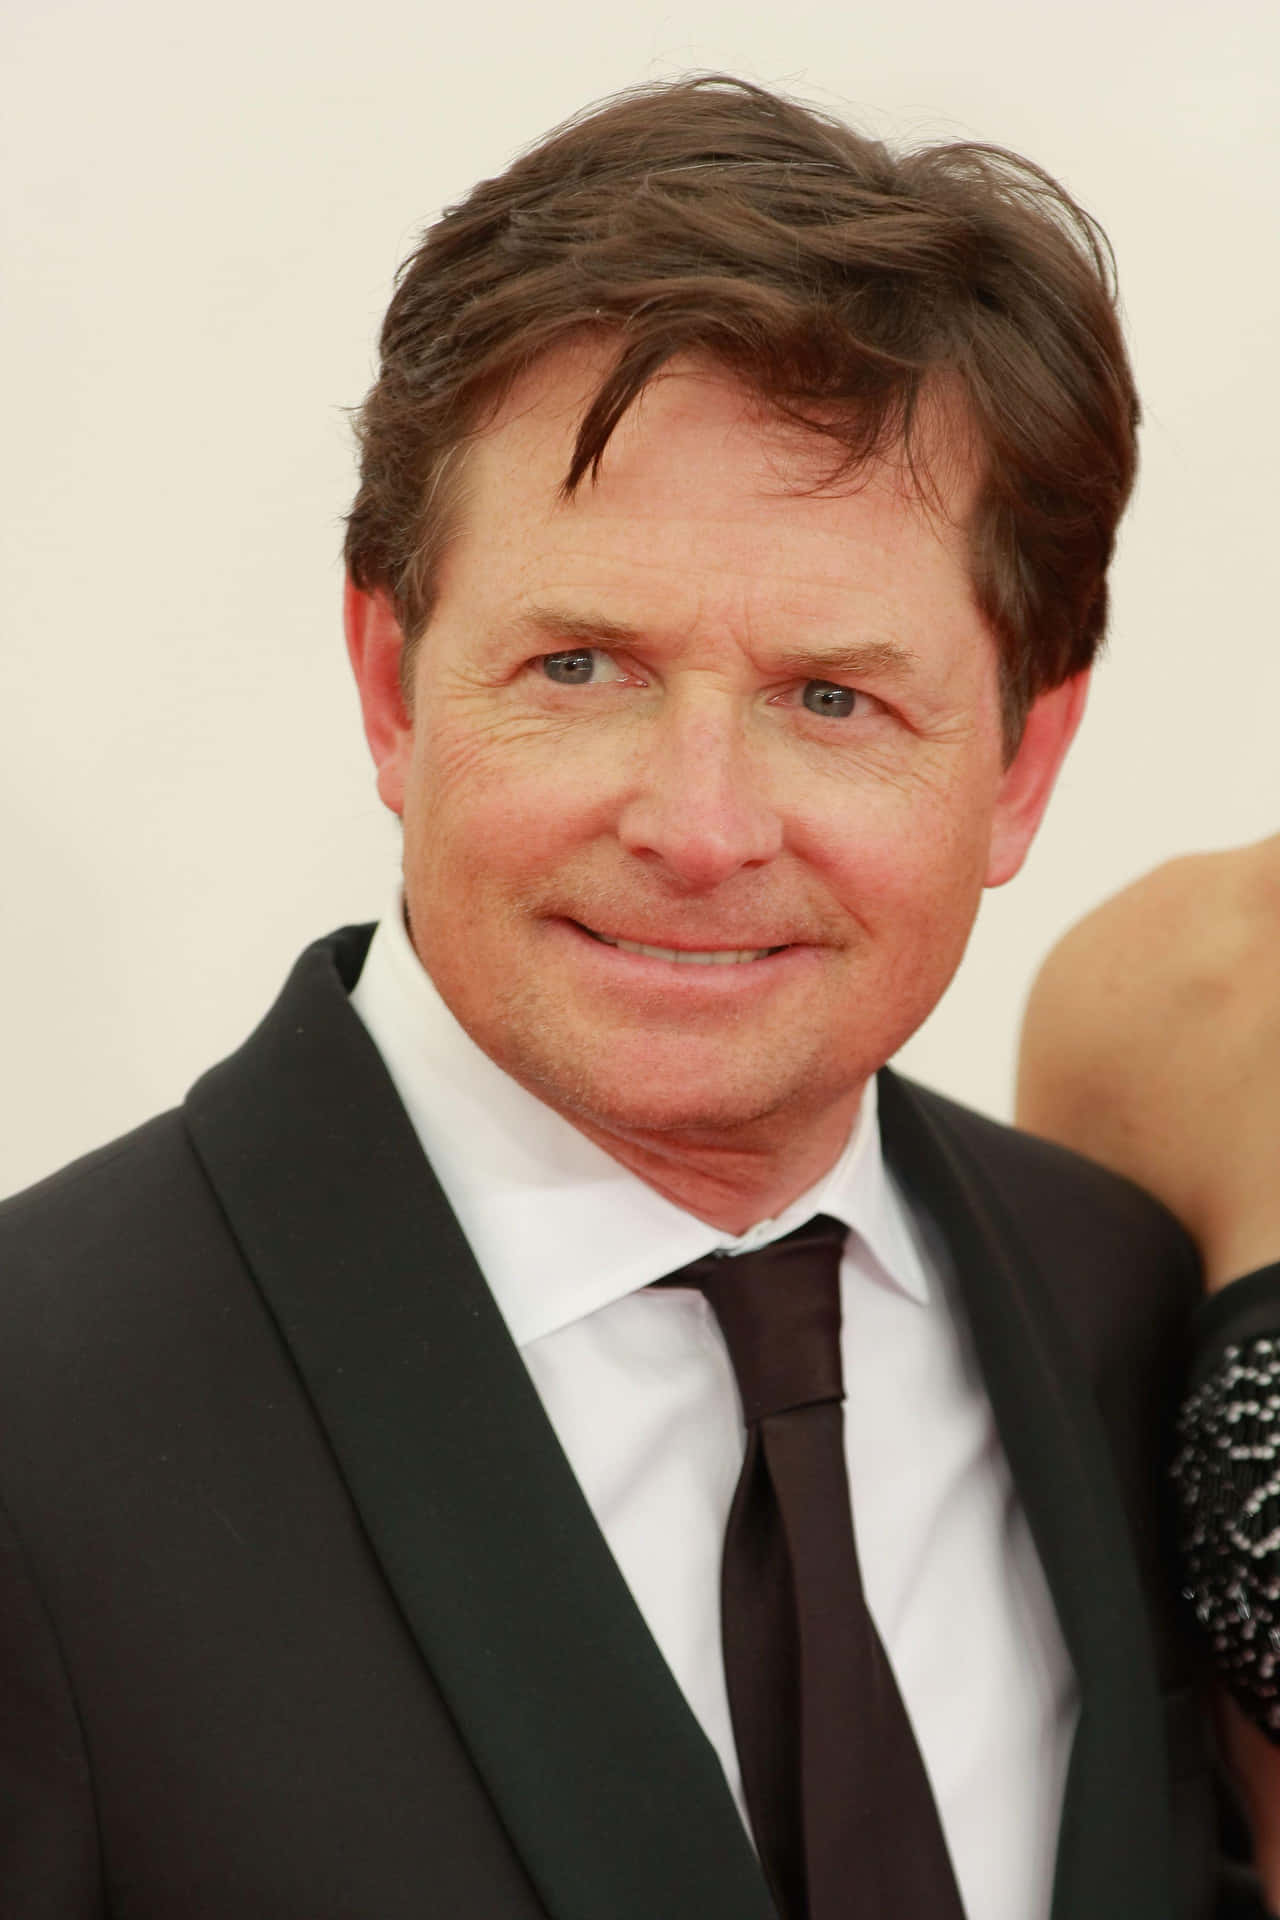 Actor Michael J Fox Brings Laughter And Joy